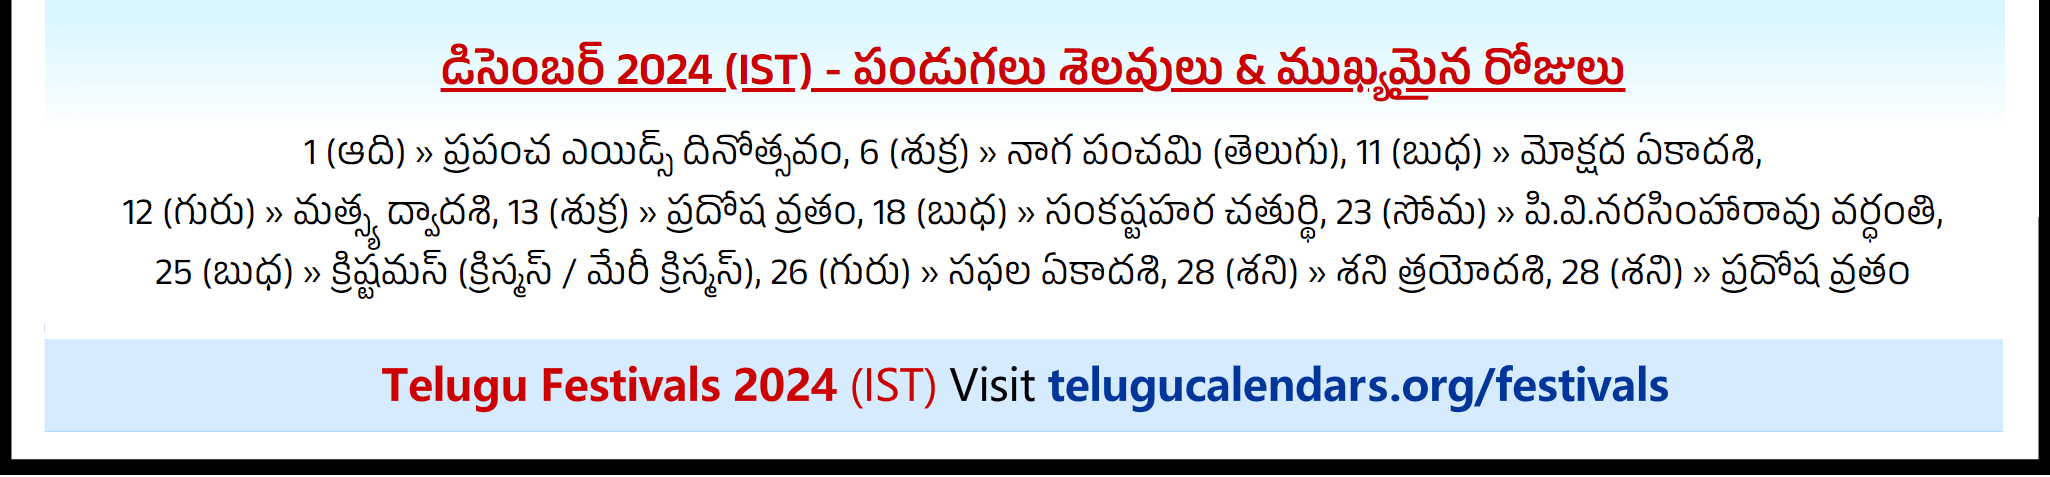 Telugu Festivals 2024 December Auckland